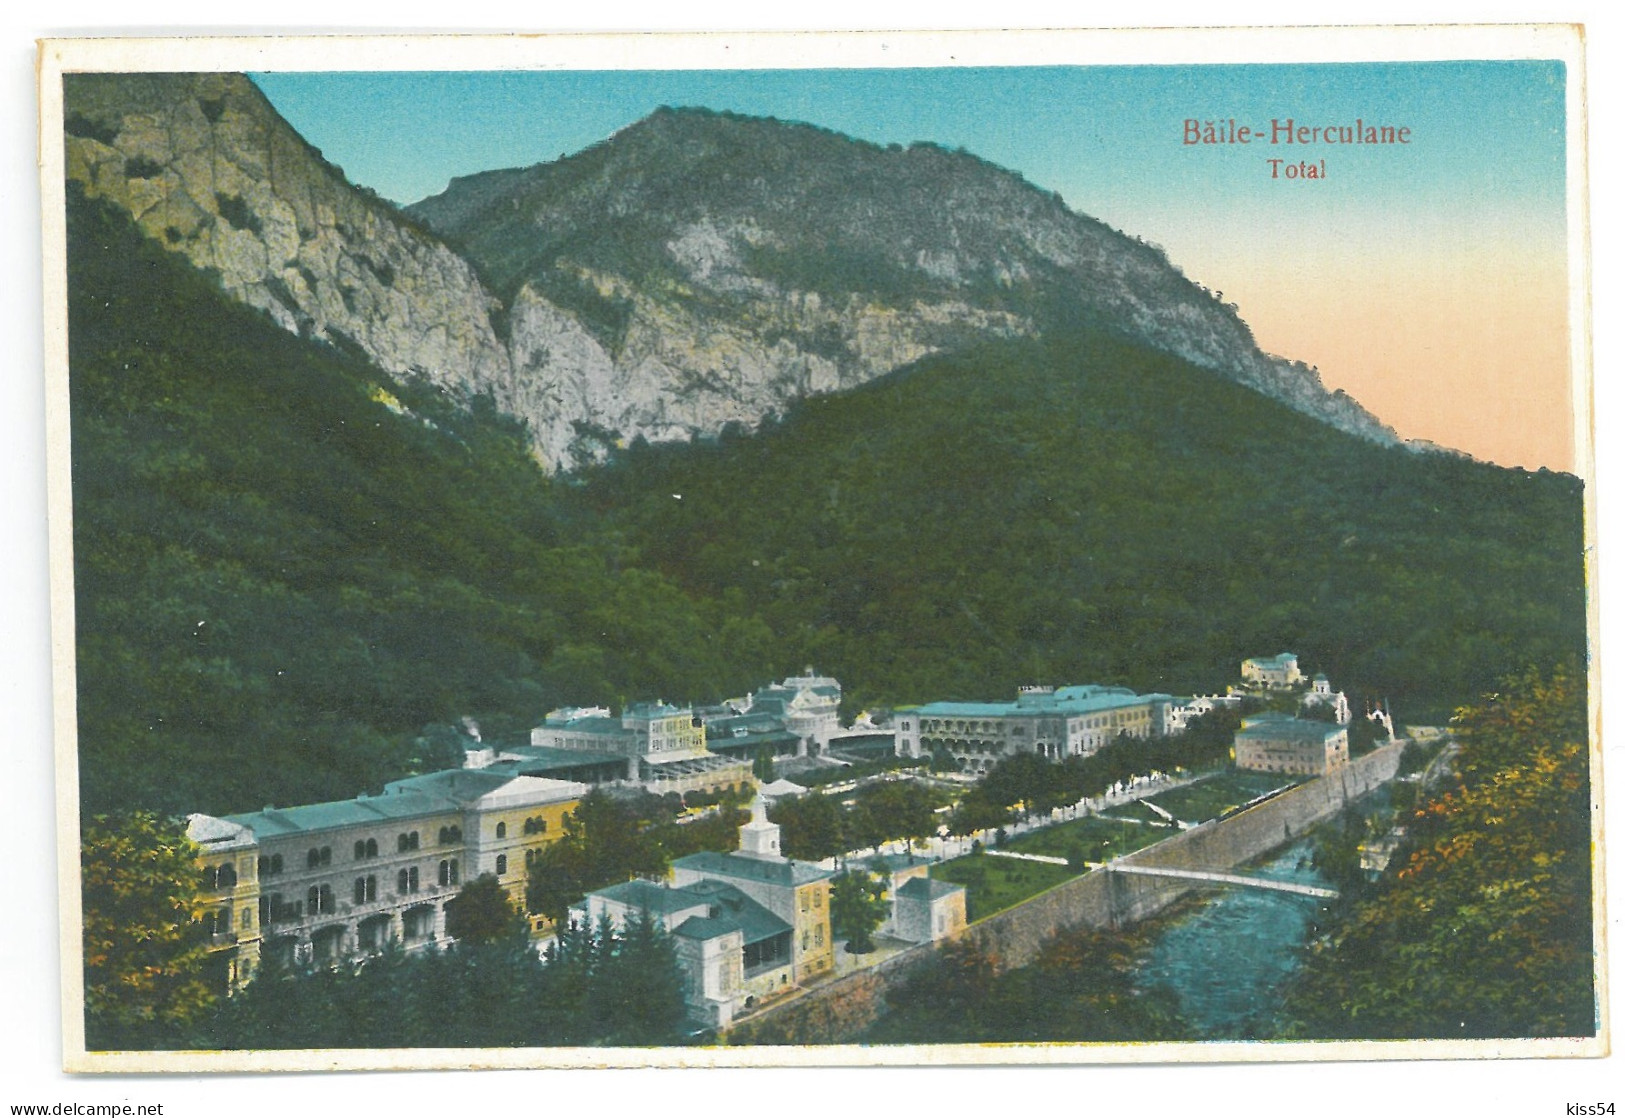 RO 87 - 25072 Baile HERCULANE, Panorama, Romania - Old Postcard - Unused - Rumänien